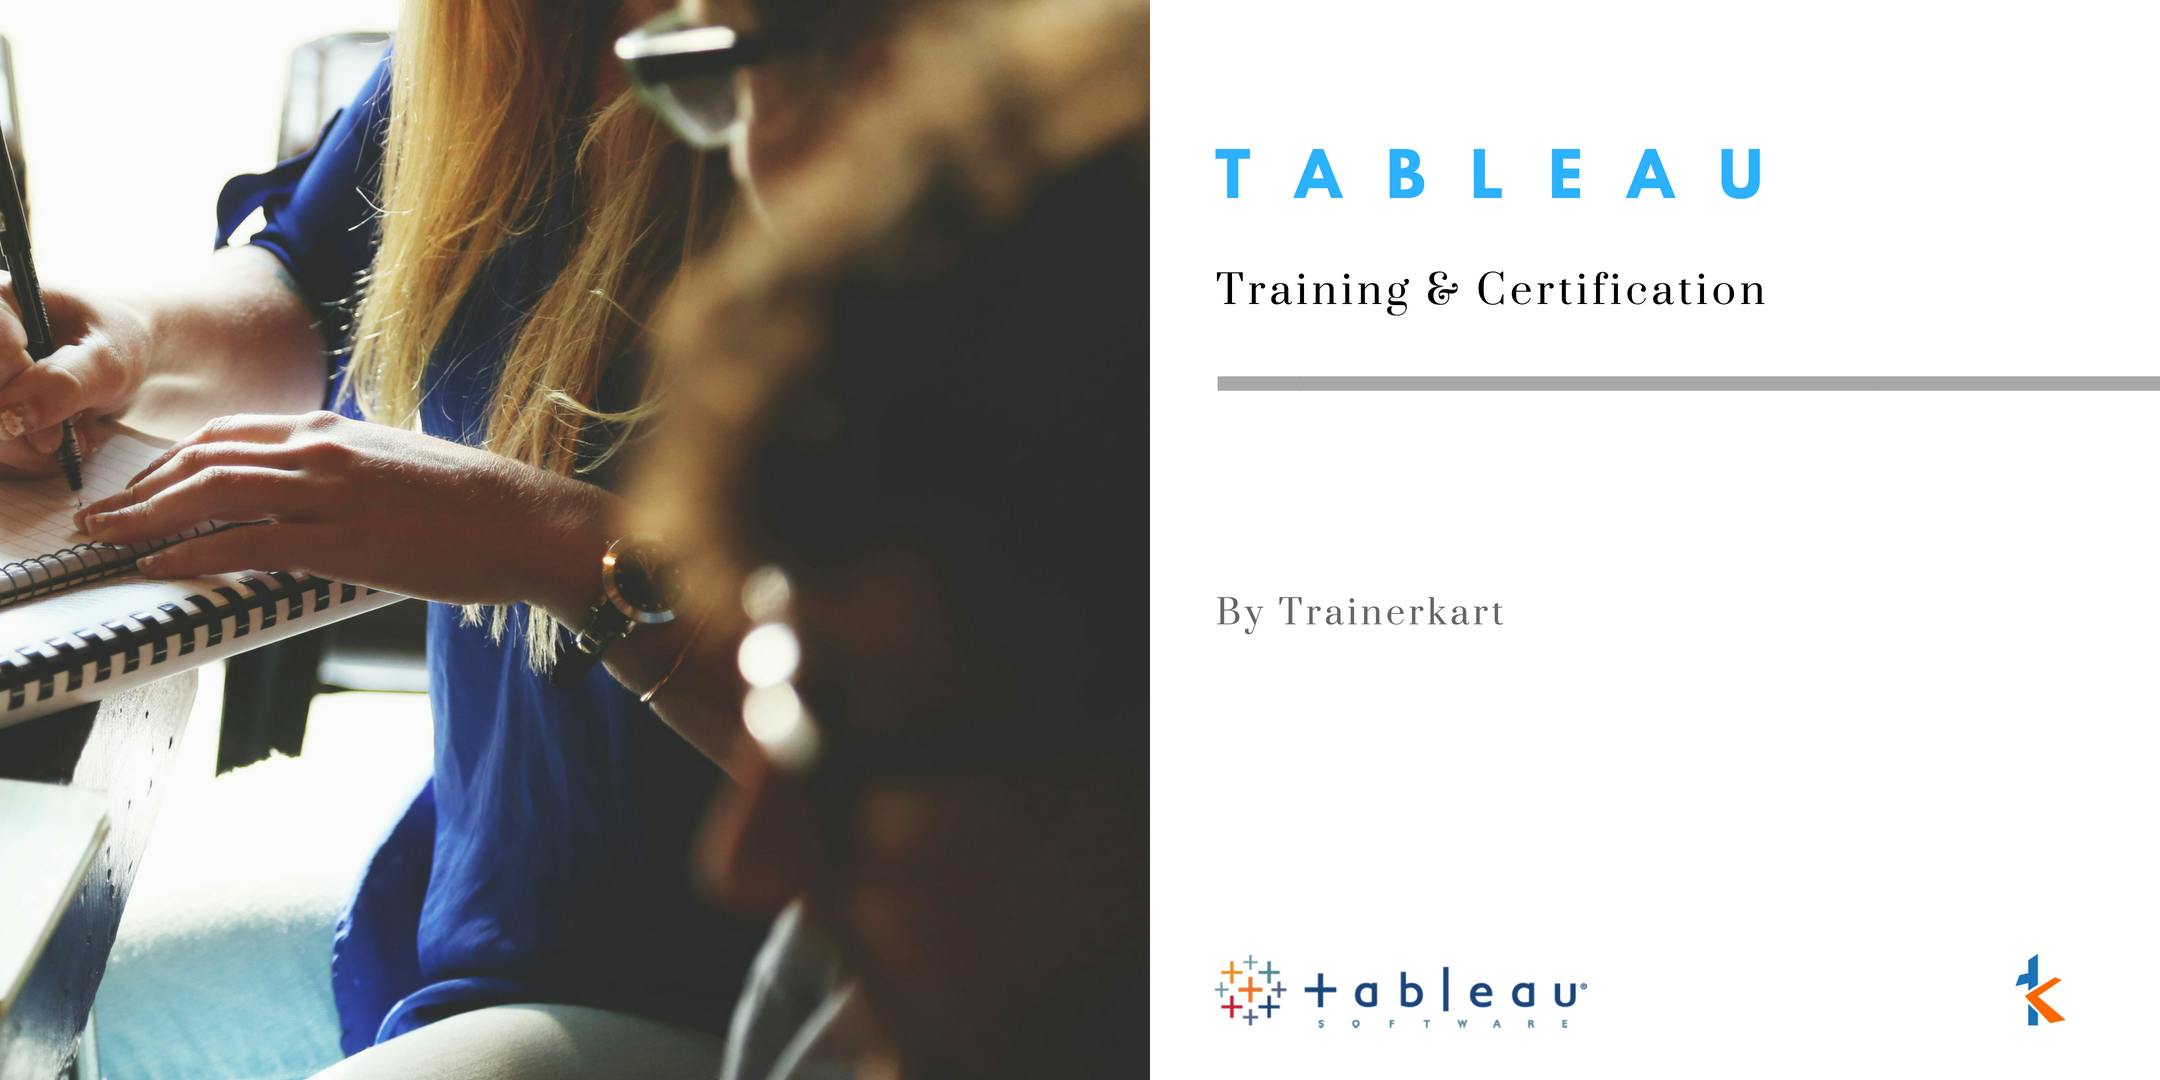 Tableau Training & Certification in Macon, GA